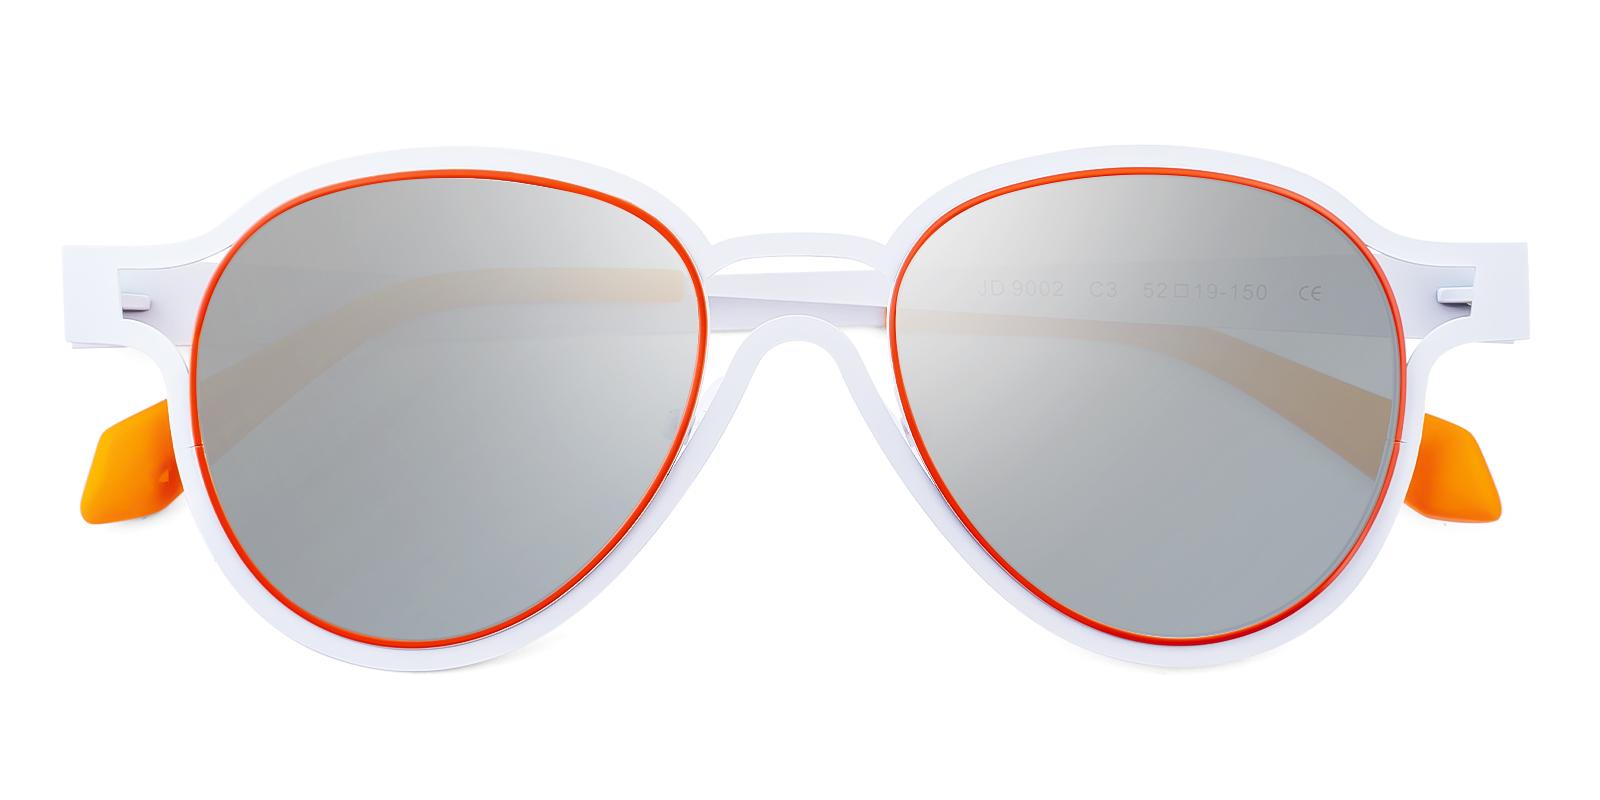 Phano White Metal NosePads , Sunglasses Frames from ABBE Glasses